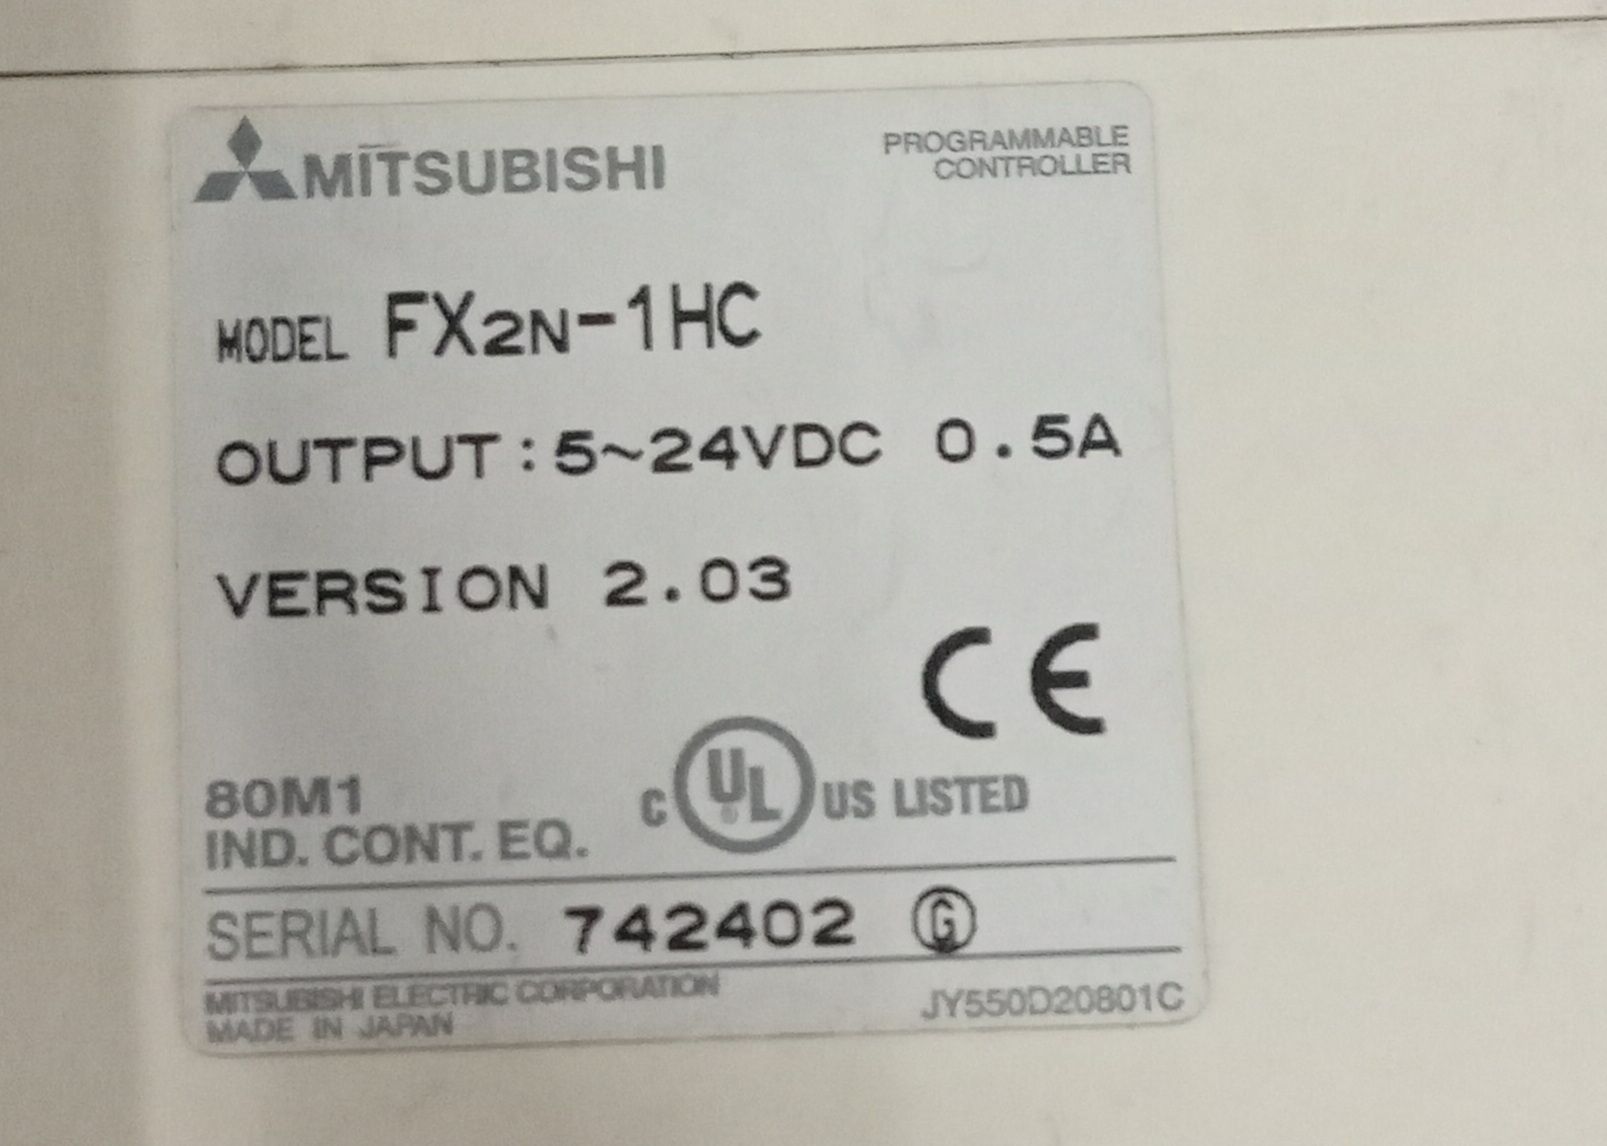 MITSUBISHI PROGRAMMABLE CONTROLLER FX2N-1HC